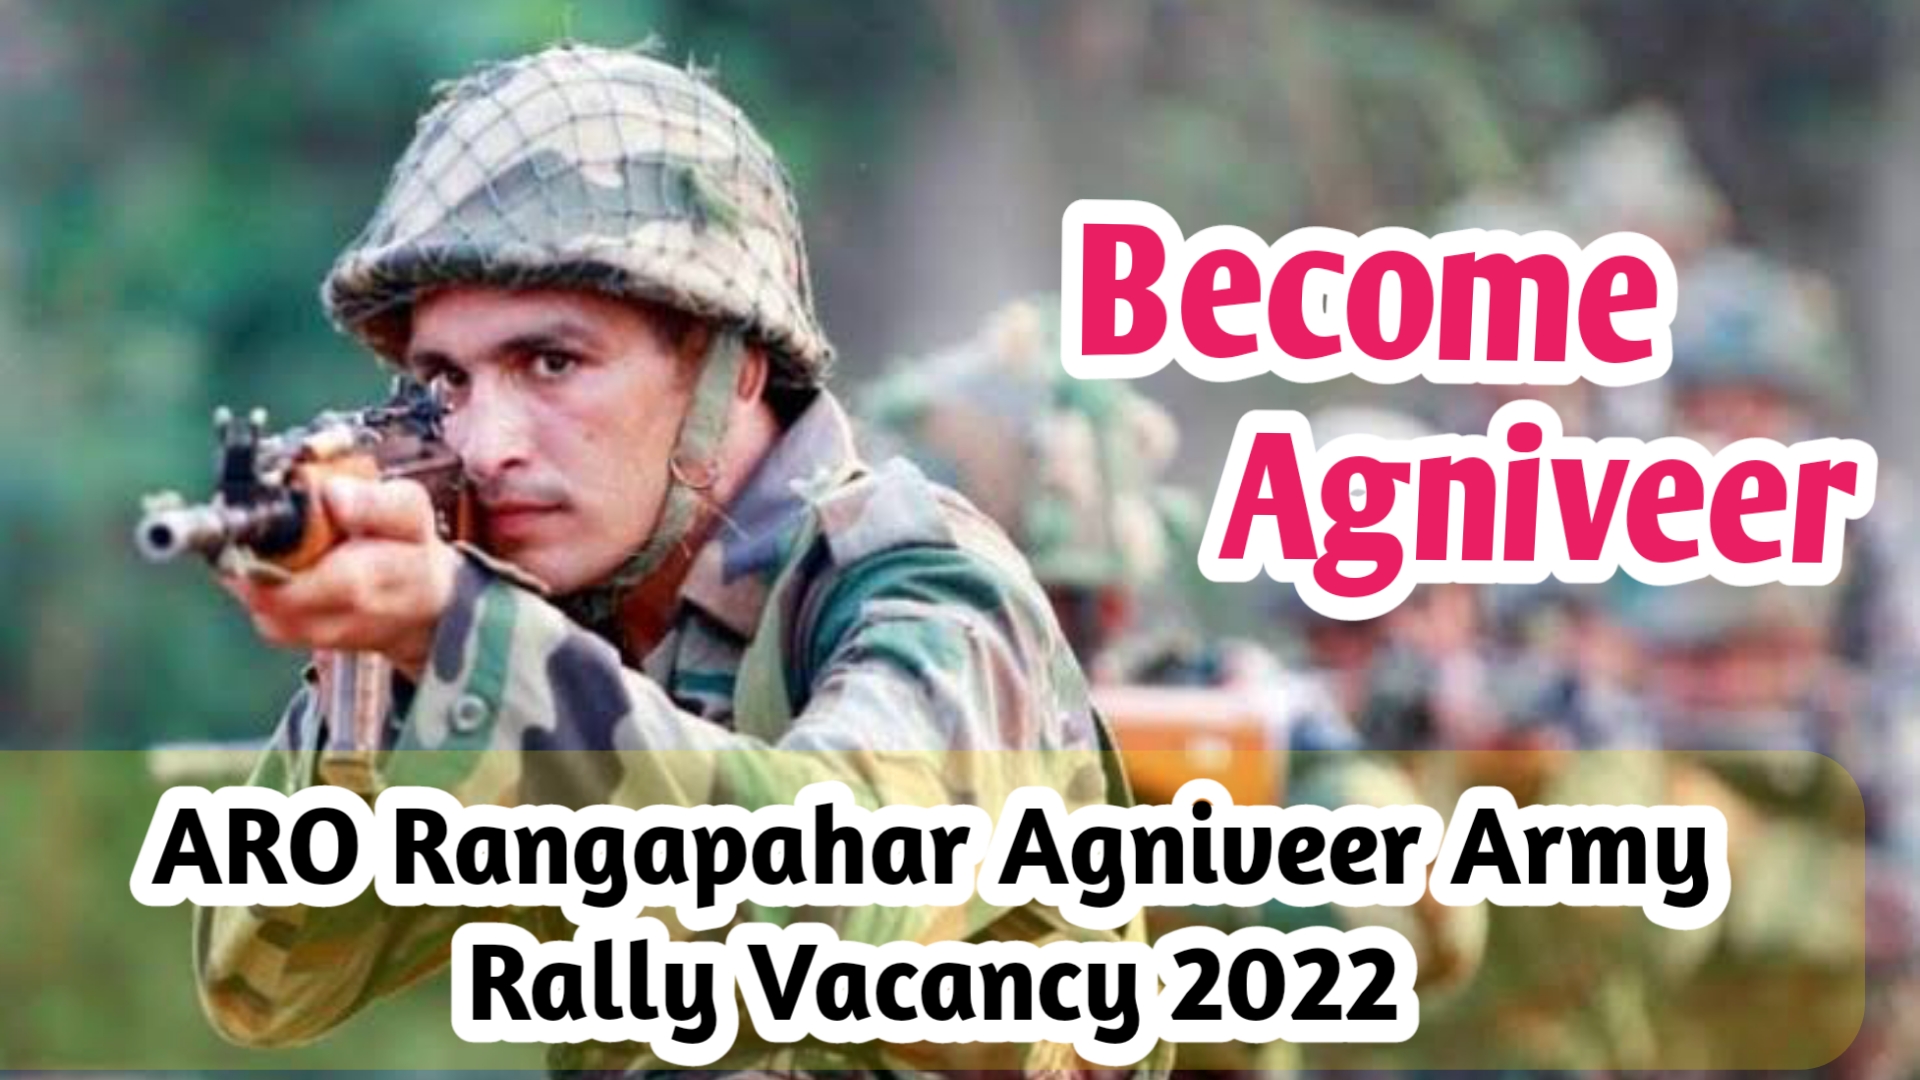 ARO Rangapahar Agniveer Army Rally Vacancy 2022.